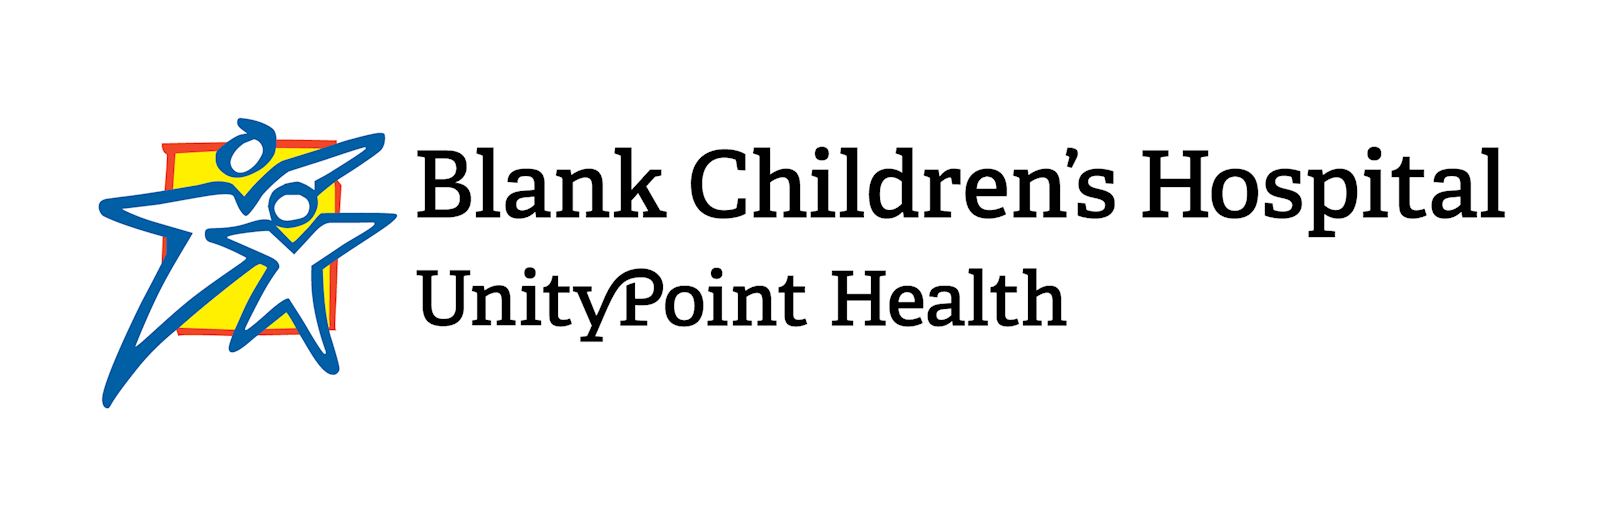 Blank Children's Hospital UnityPoint Health logo